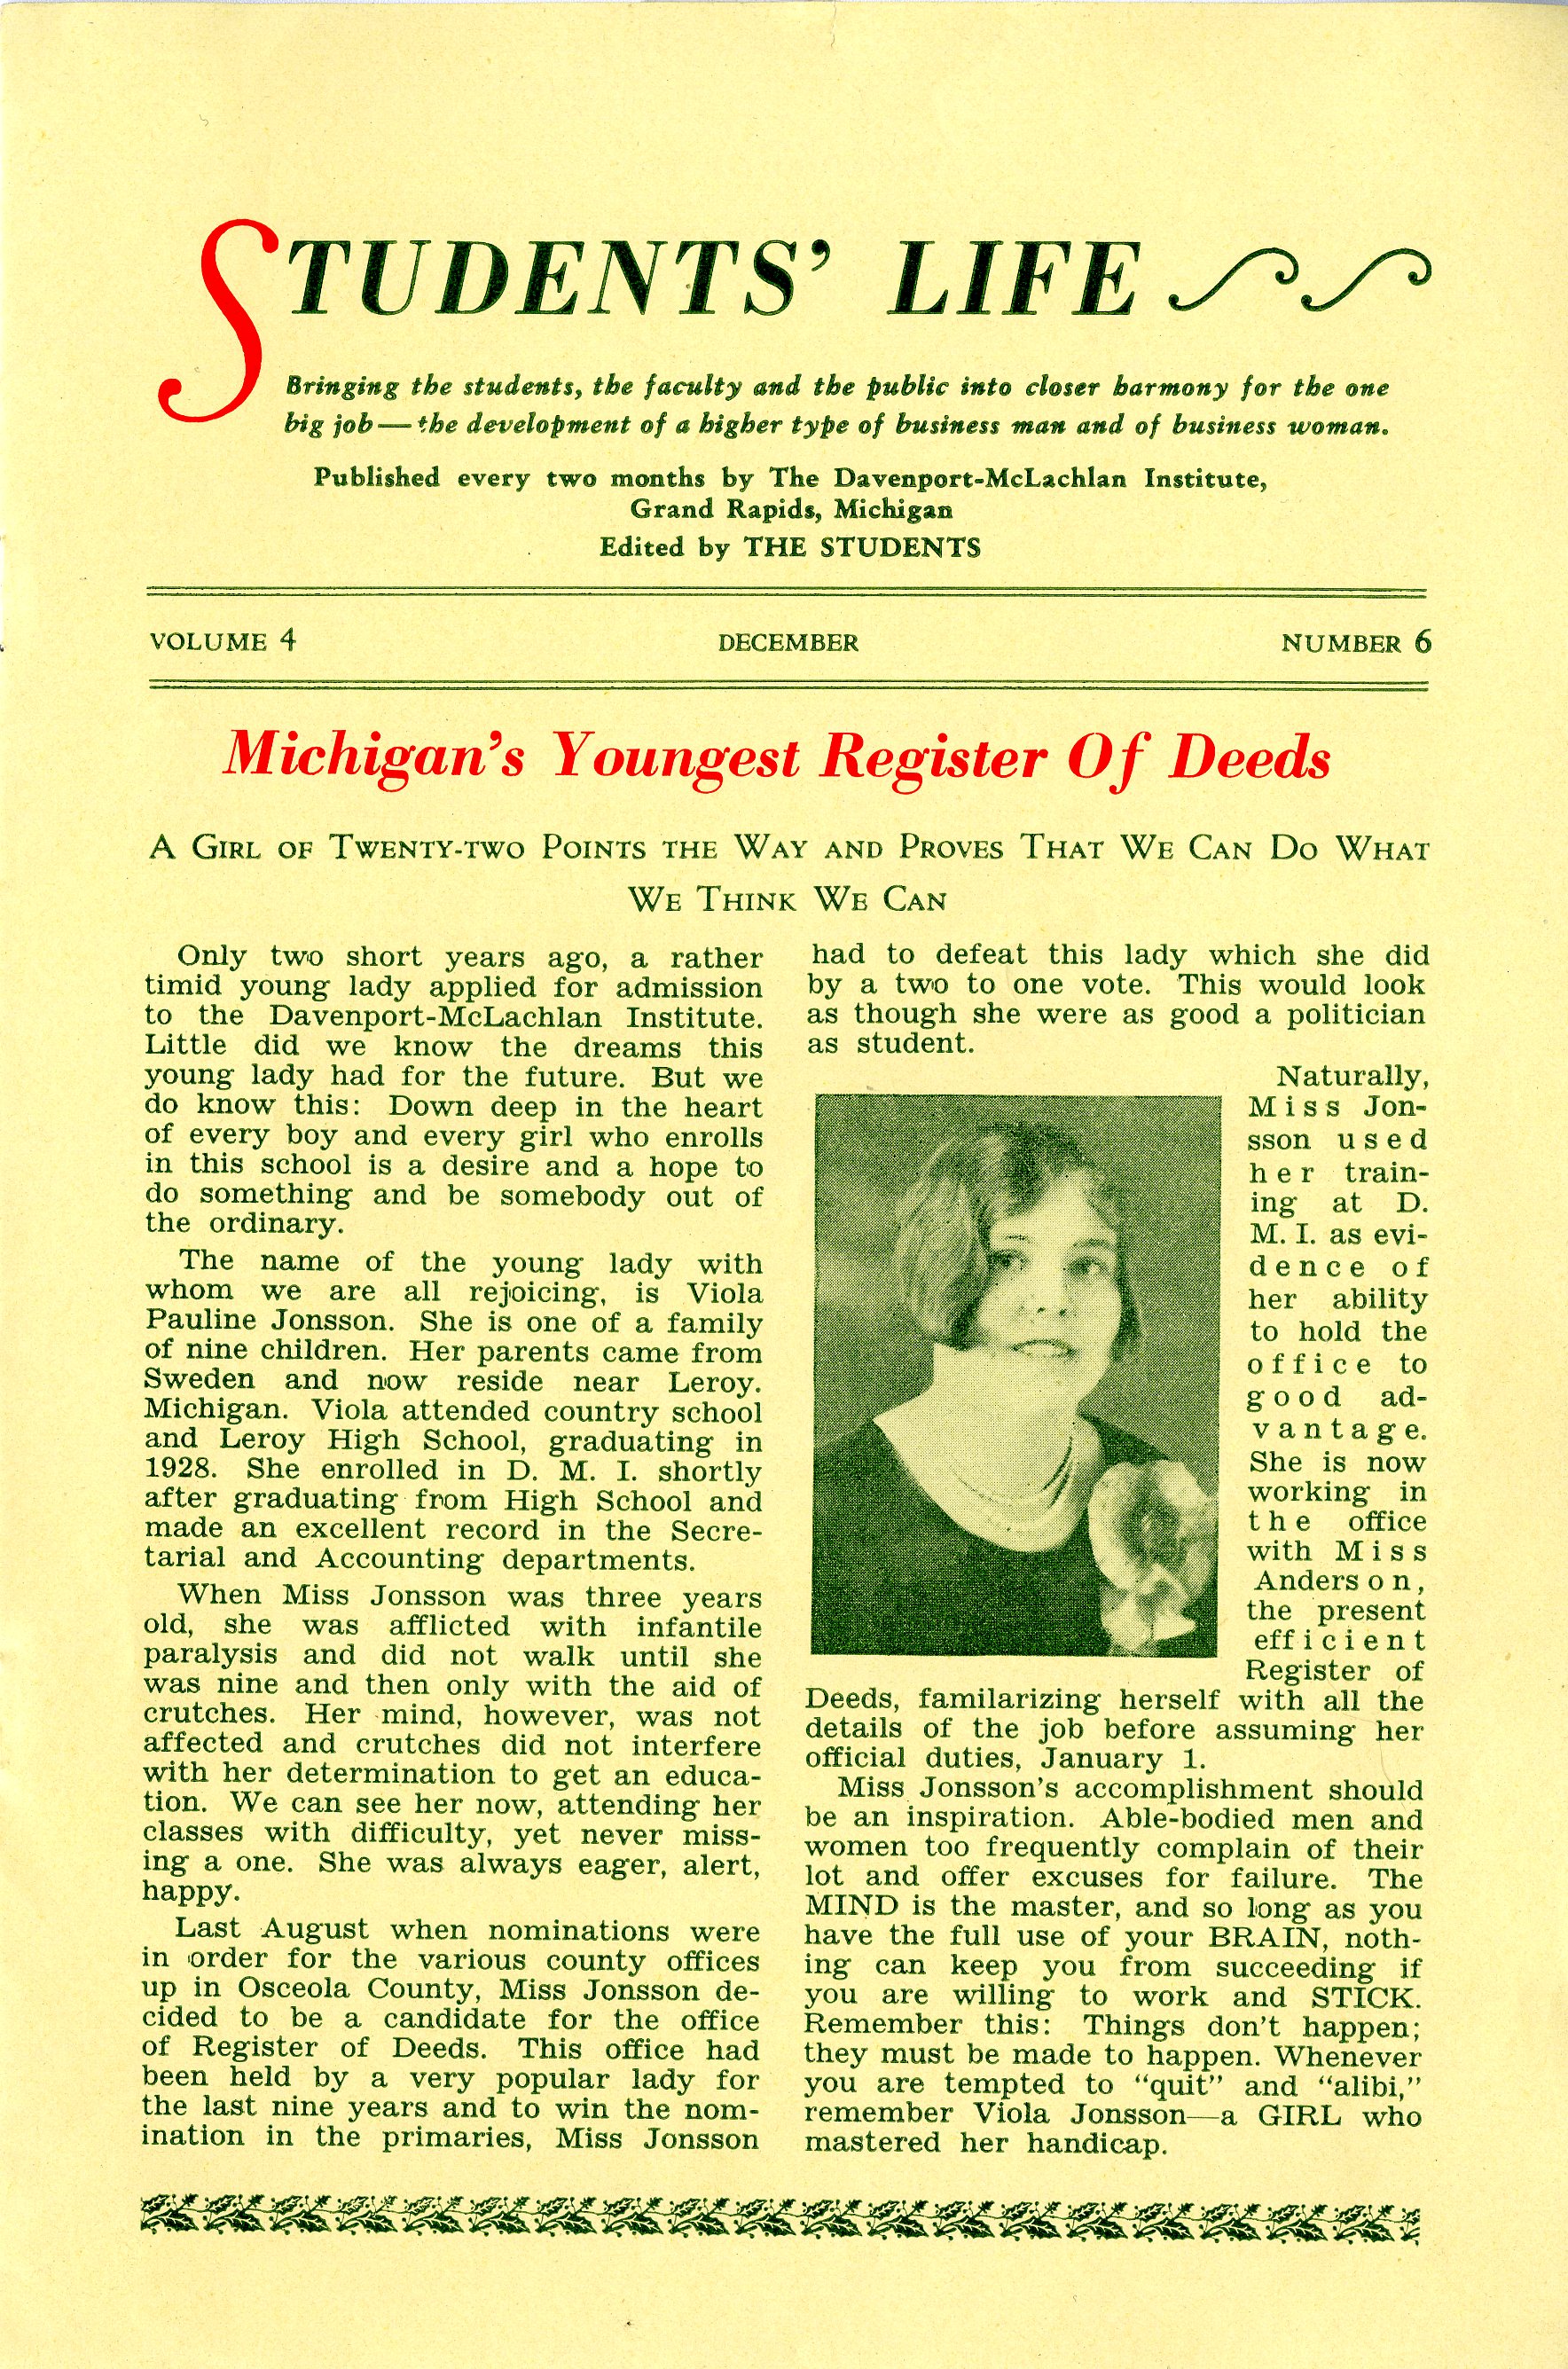 Michigan's youngest Register of Deeds